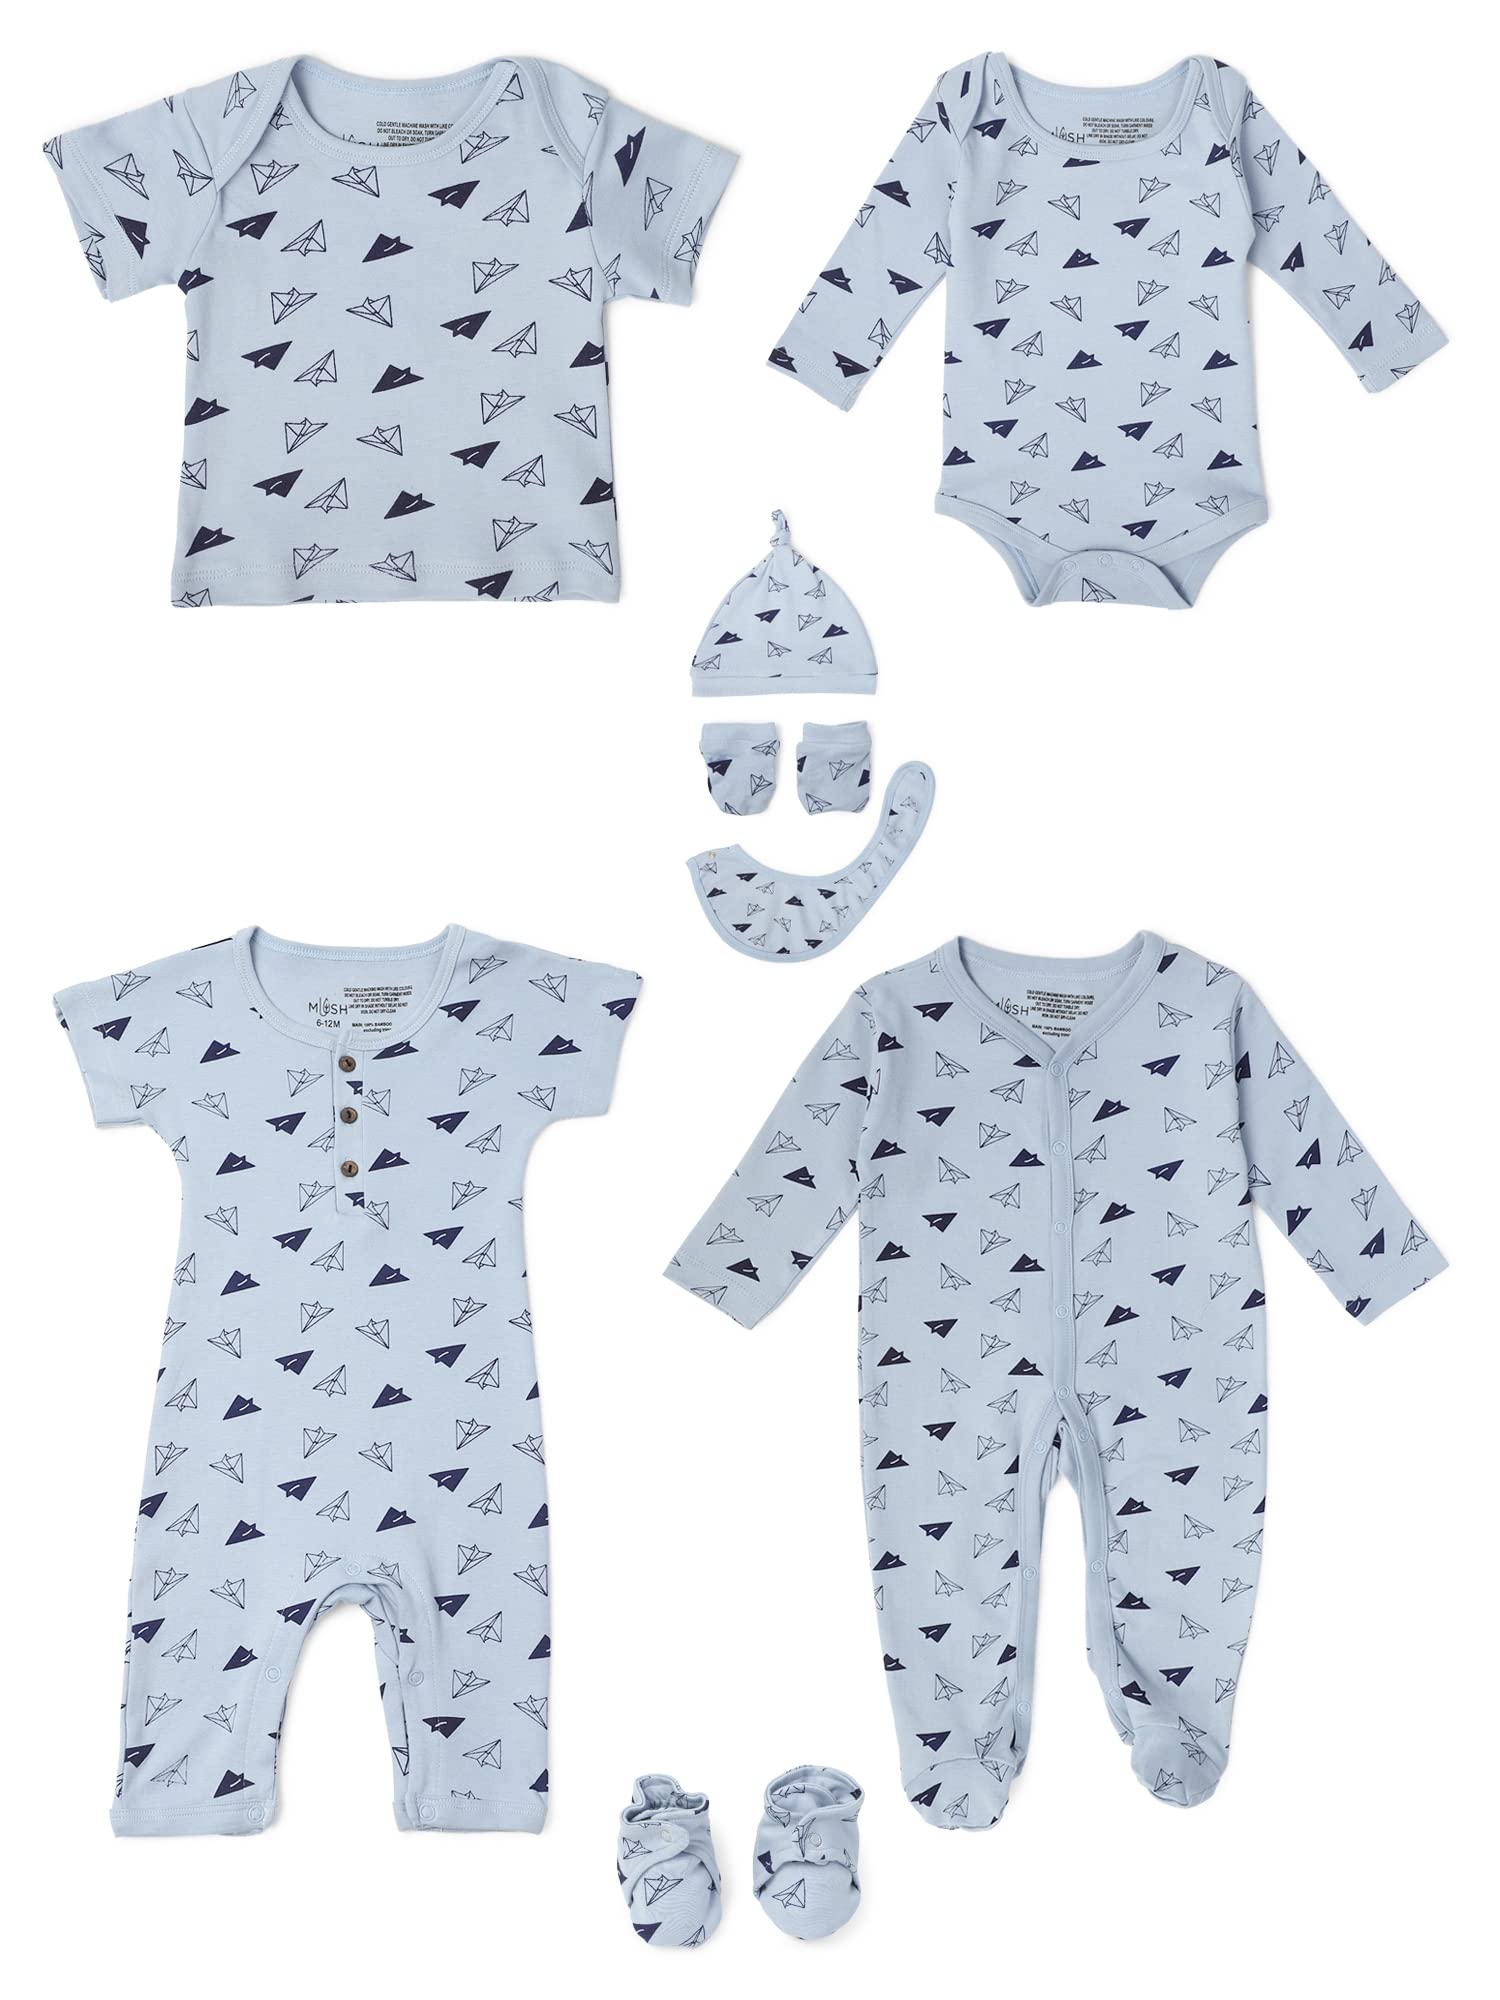 Mush Ultra Soft Bamboo Unisex Fabric Unisex Gift Set for New Born Baby/Kids Pack of 9, (0-3 Months, Aeroplane)